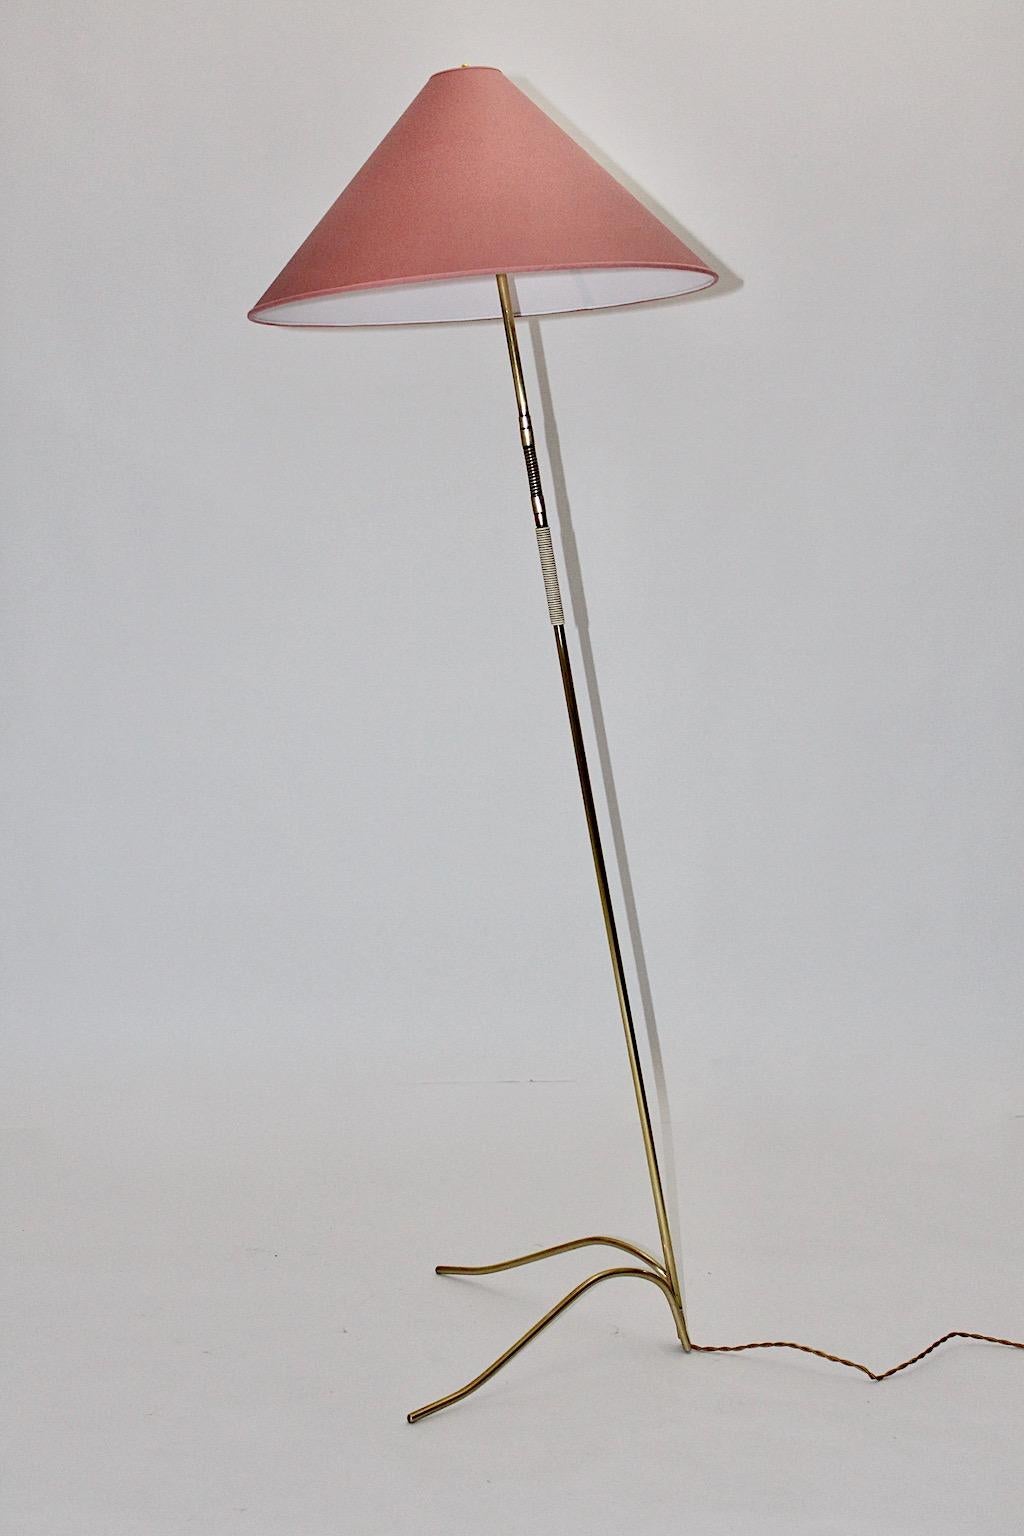 Brass Vintage Mid-Century Modern Splayfoot Floor Lamp Rupert Nikoll 1950 Austria For Sale 2